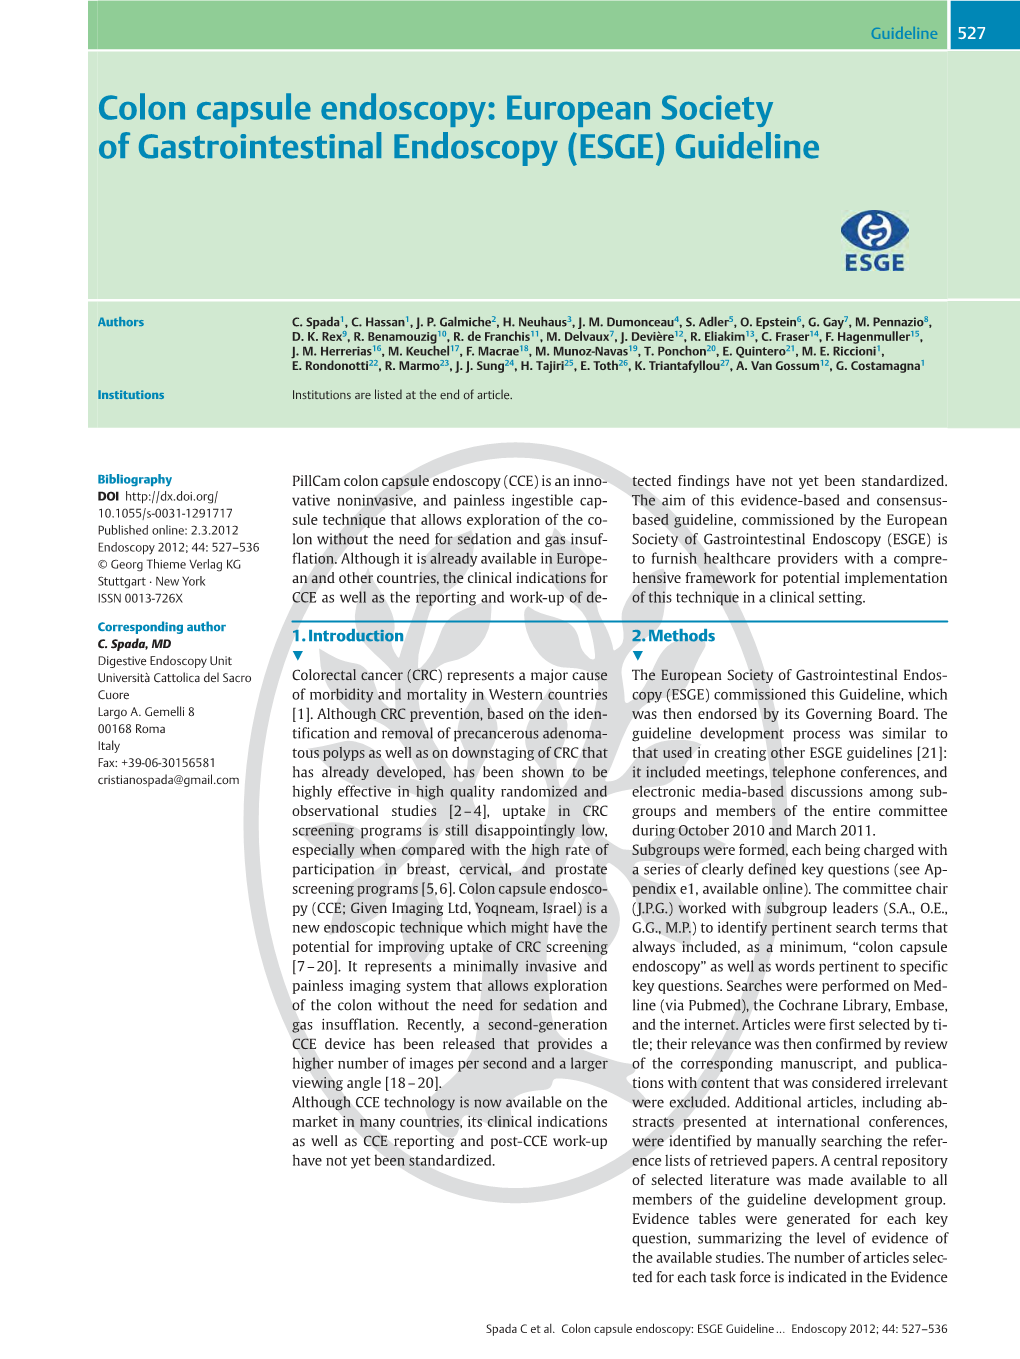 Colon Capsule Endoscopy: European Society of Gastrointestinal Endoscopy (ESGE) Guideline